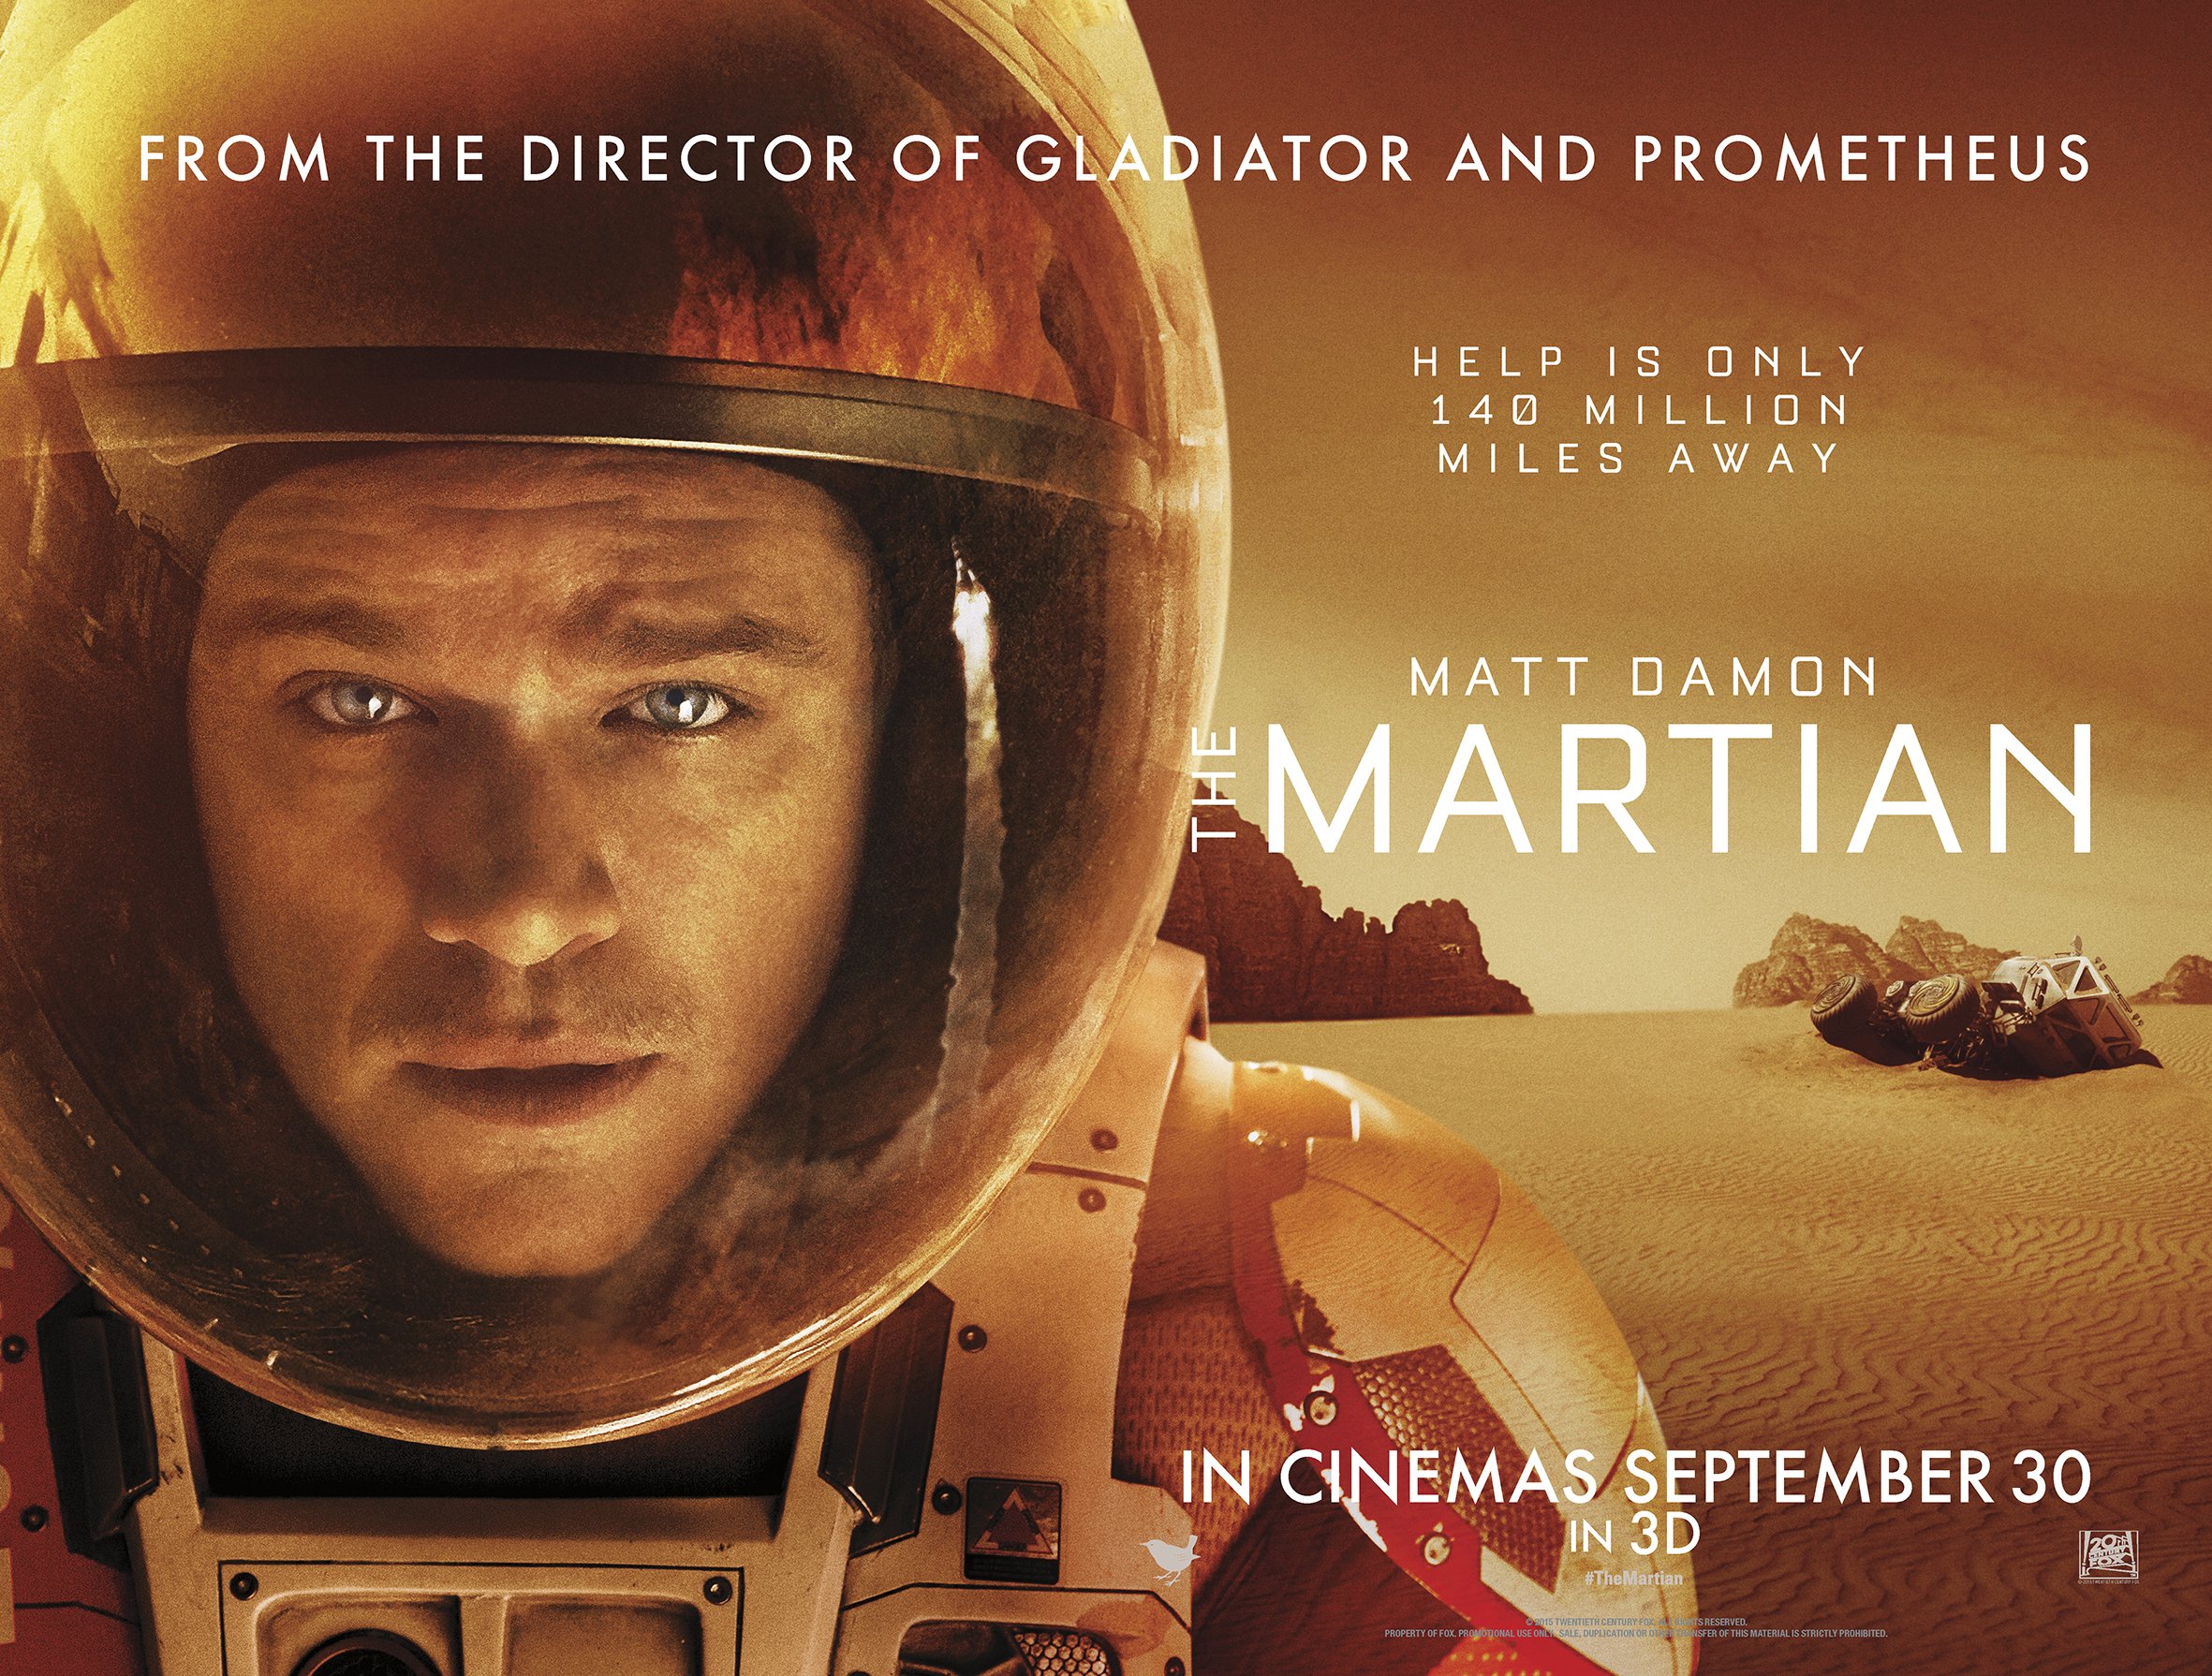 martian, Sci fi, Futuristic, Astronaut, Mars, 1martian, Adventure, Drama, Damon, Poster Wallpaper